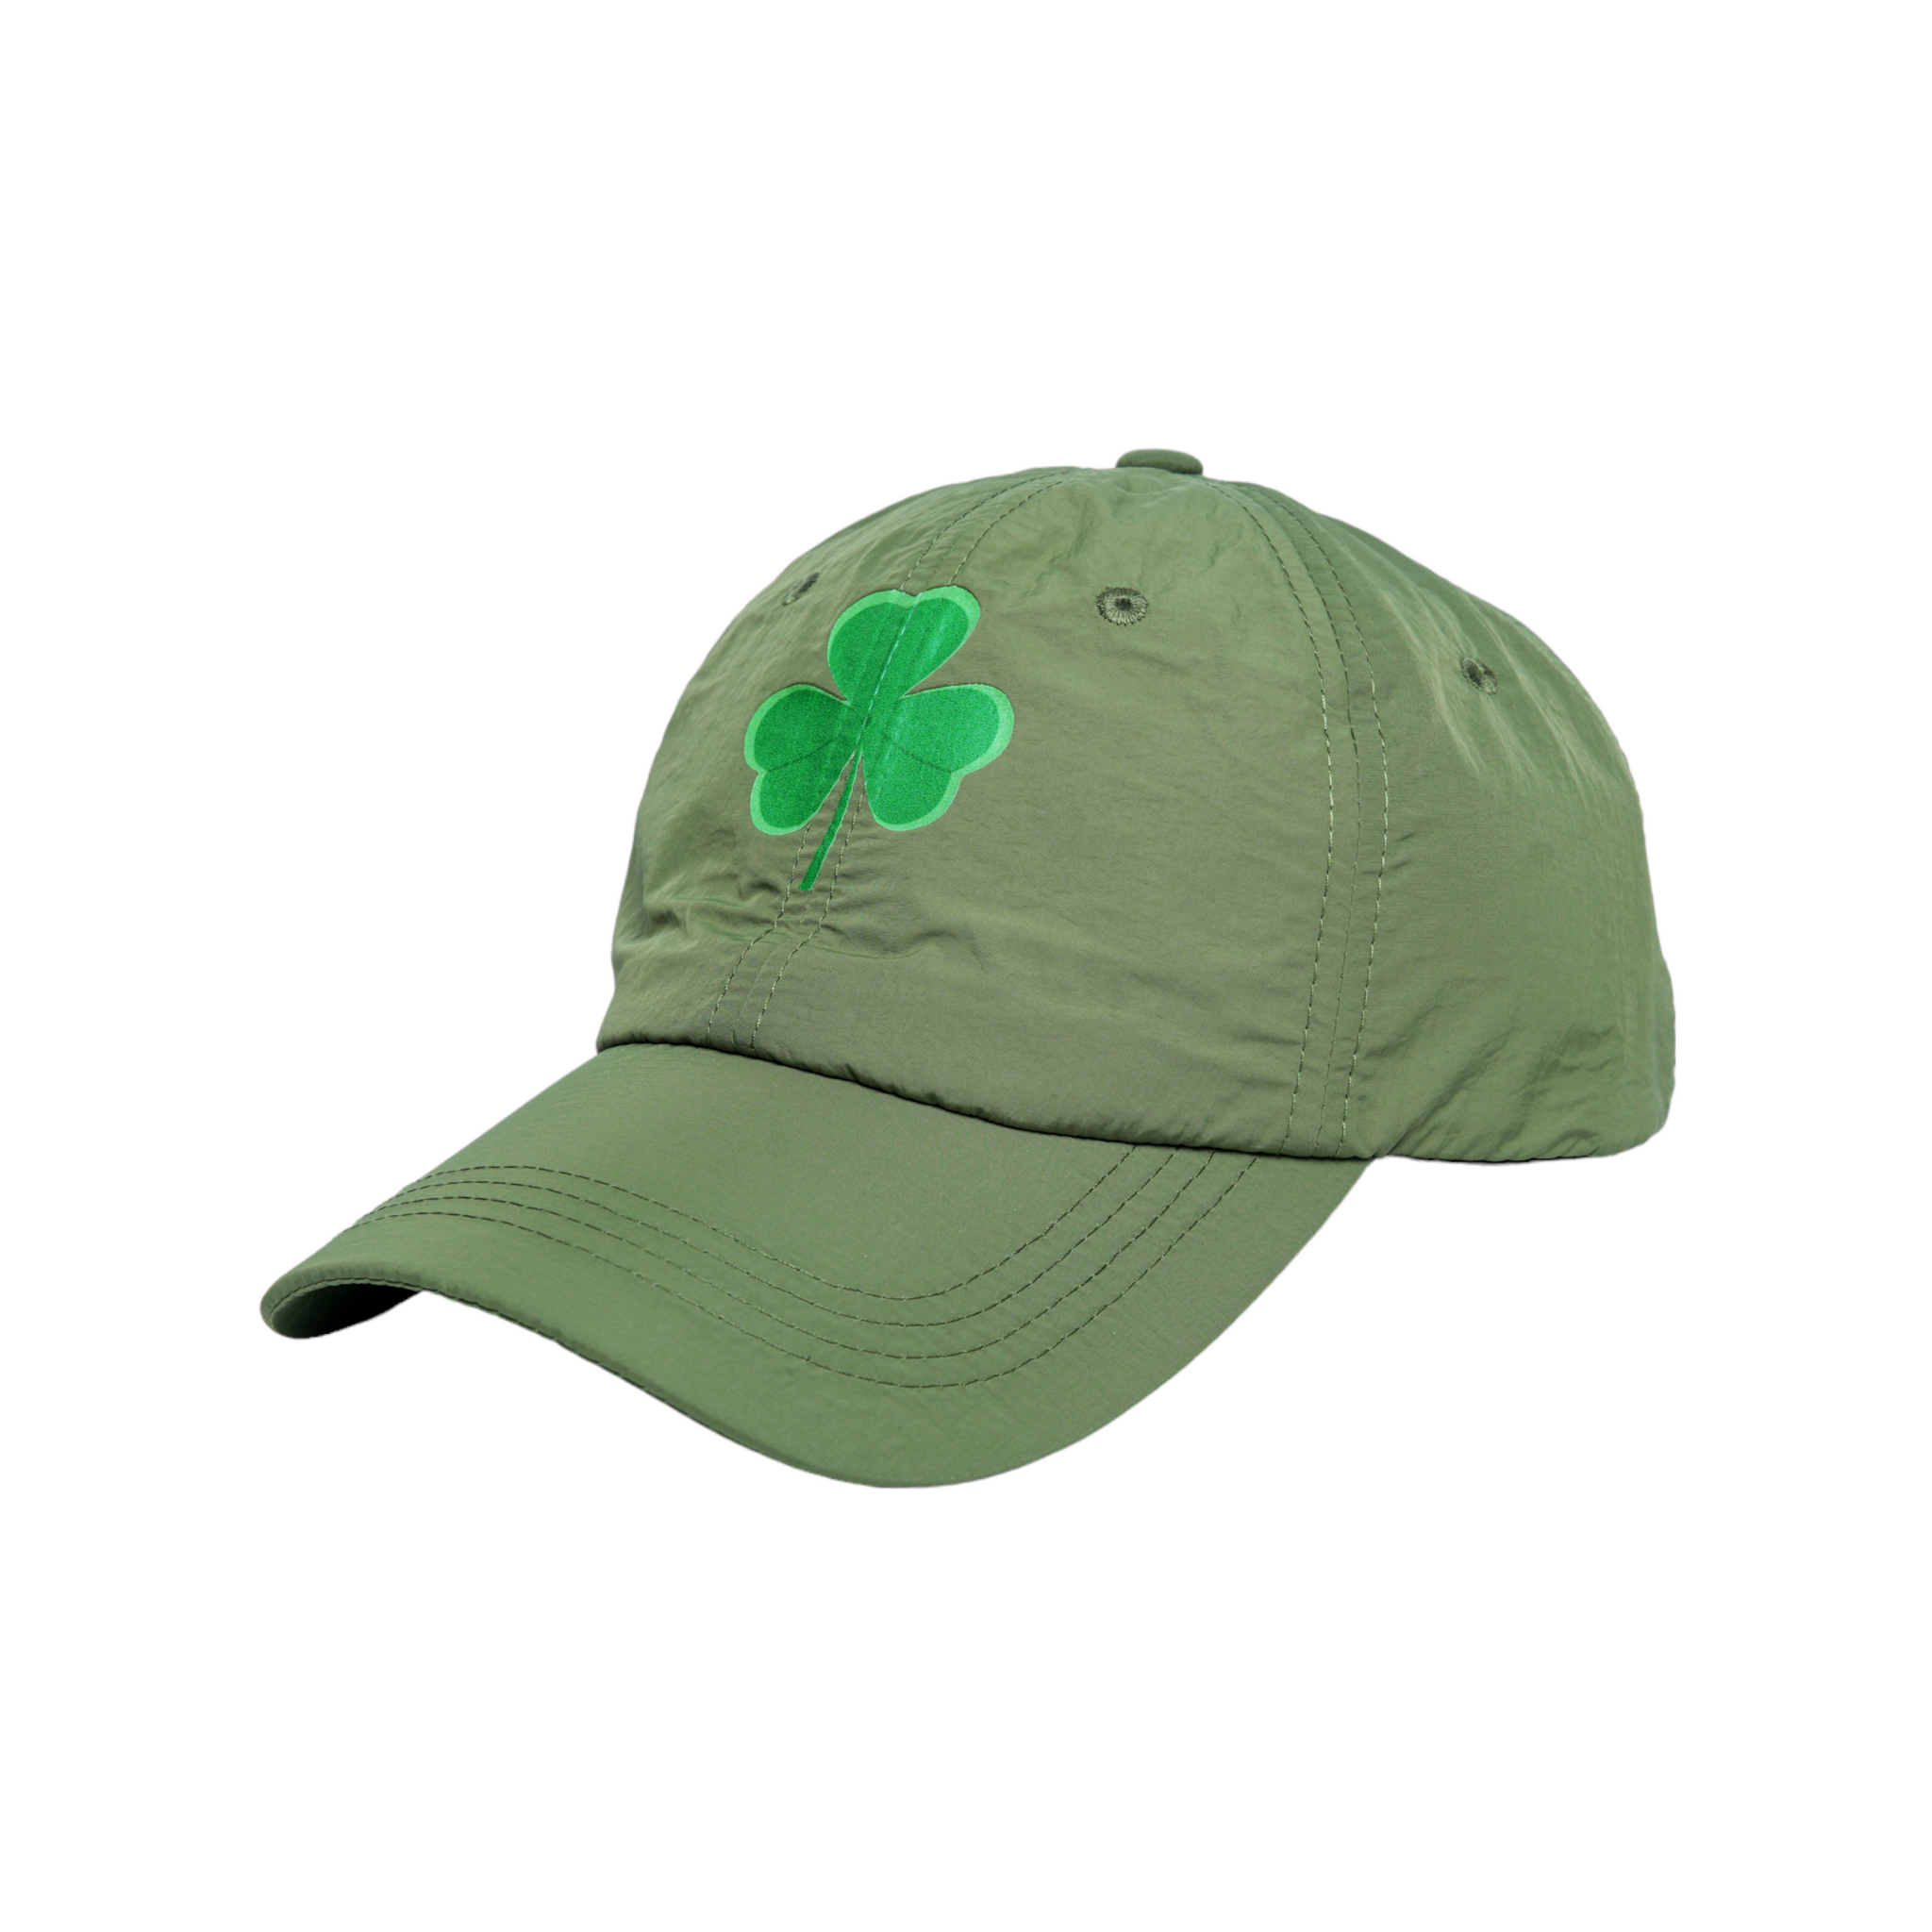 Chokore Three-Leaf Clover Baseball Cap (Army Green)